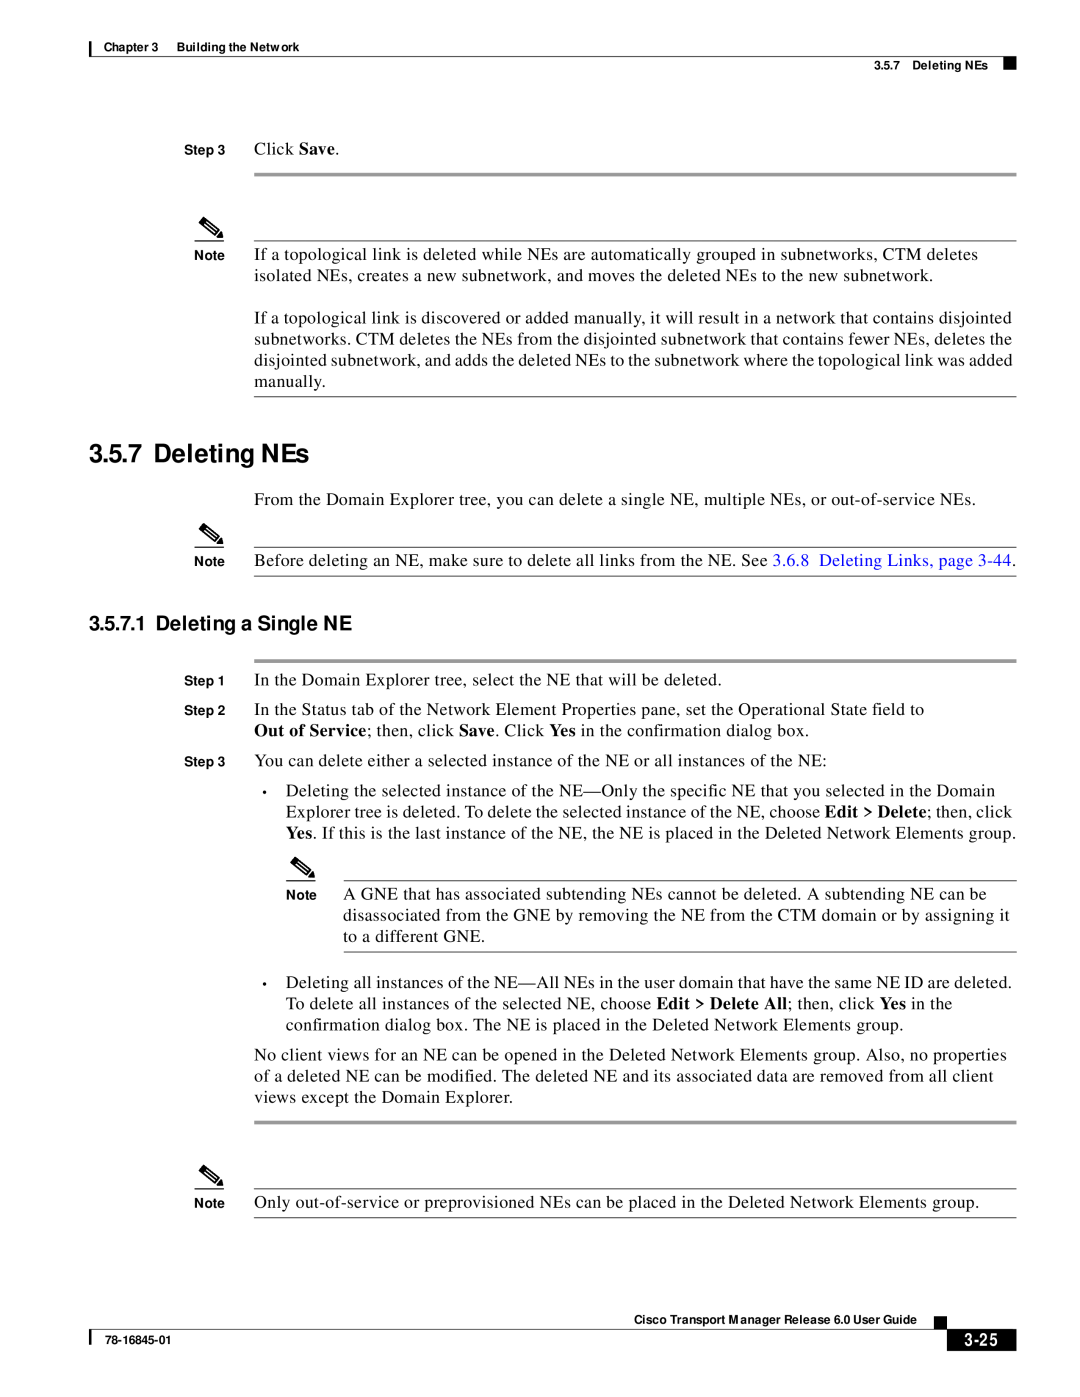 Cisco Systems 78-16845-01 manual Deleting NEs, Deleting a Single NE, 3-25 